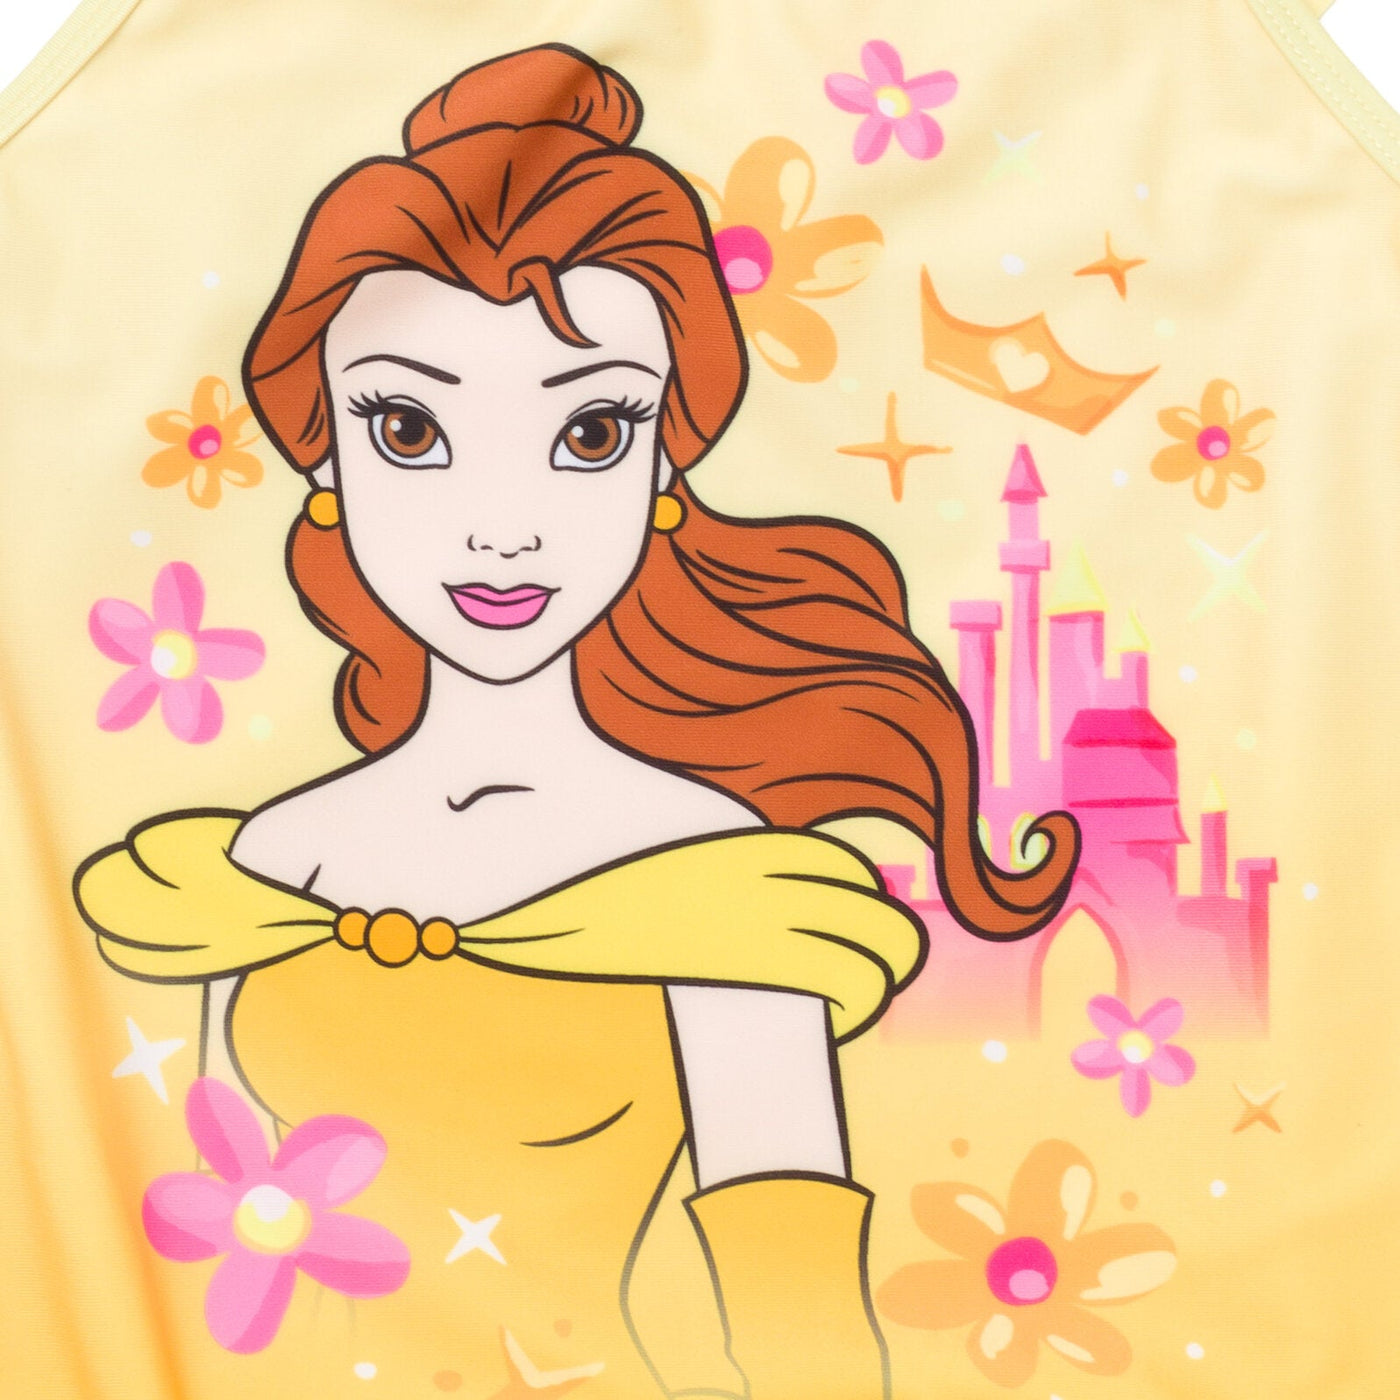 Disney Princess Belle UPF 50+ One Piece Bathing Suit - imagikids